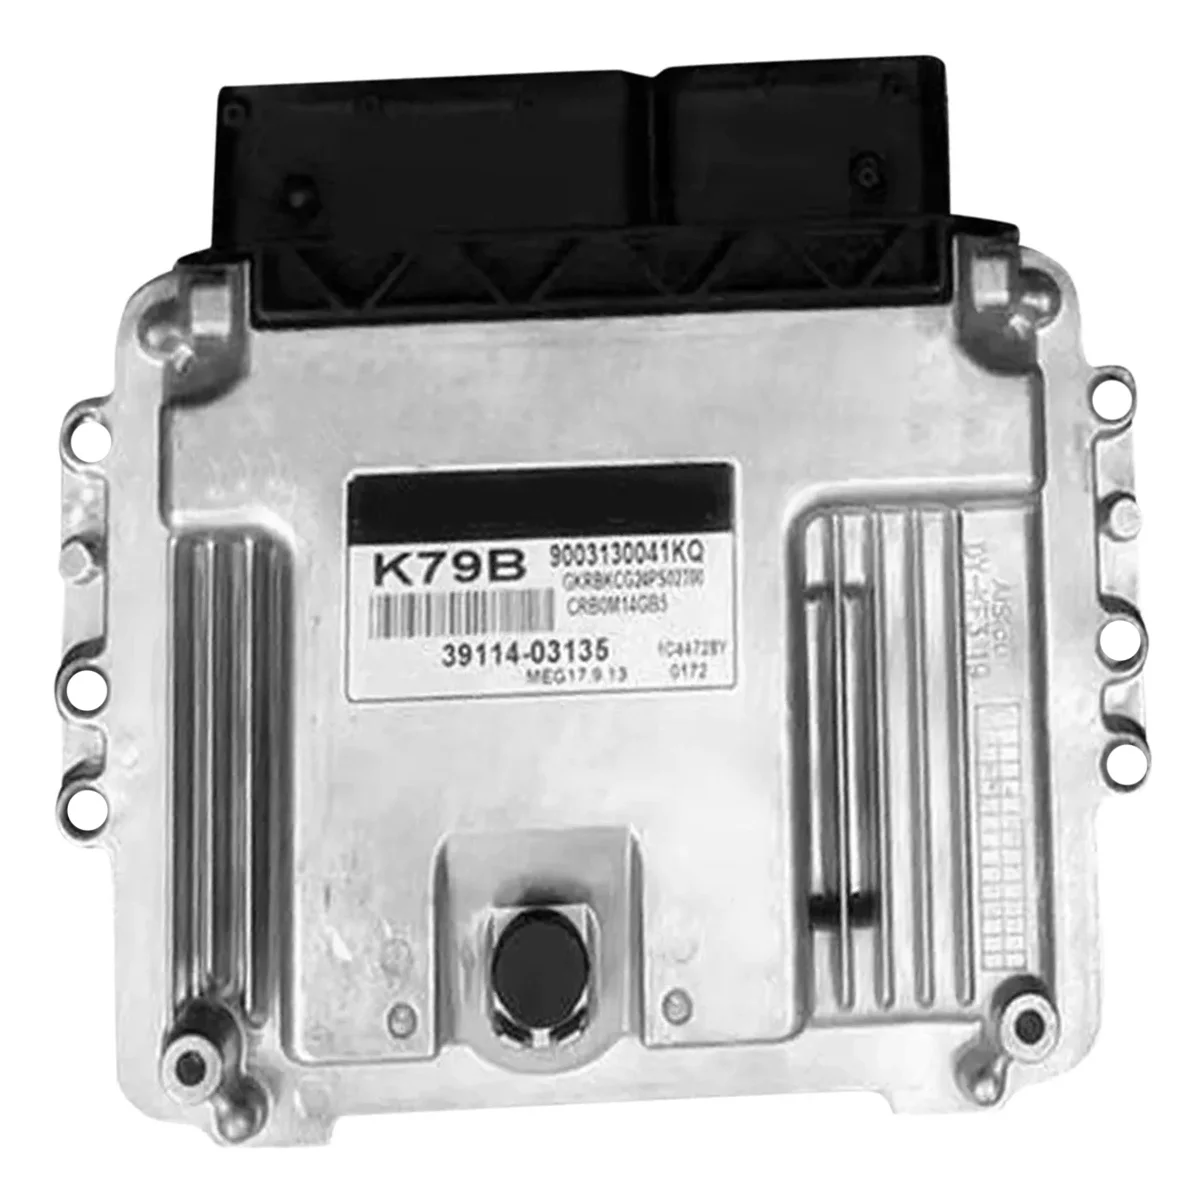 

39114-03135 Car ECU ECM Engine Computer Board Electronic Control Unit Module for KIA Hyundai MEG17.9.13 K79B